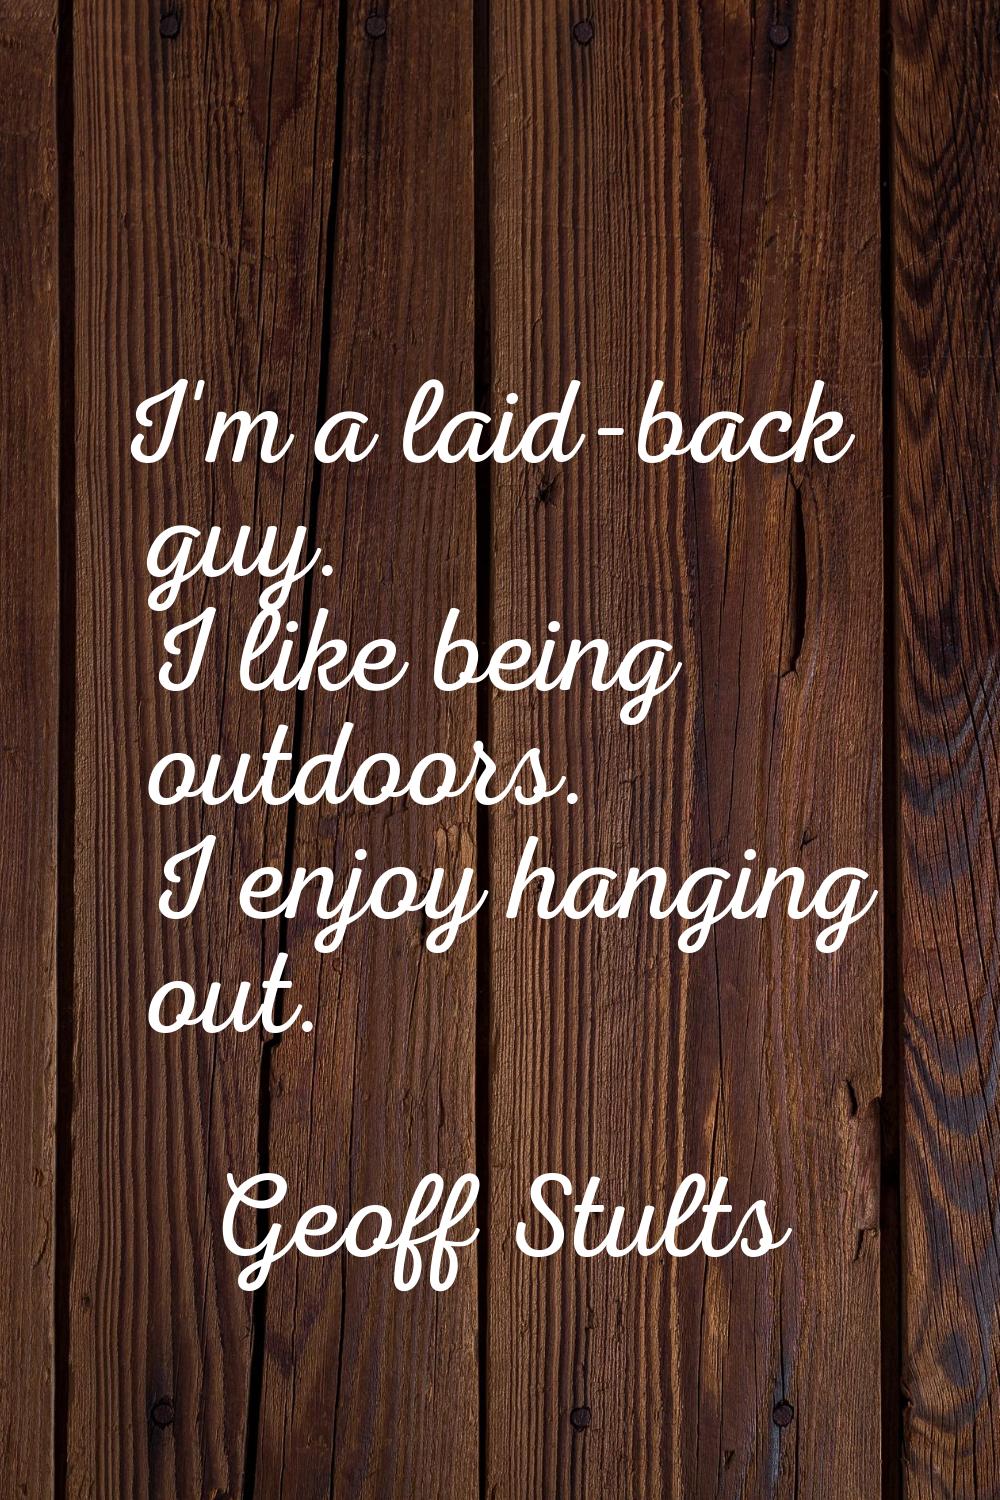 I'm a laid-back guy. I like being outdoors. I enjoy hanging out.